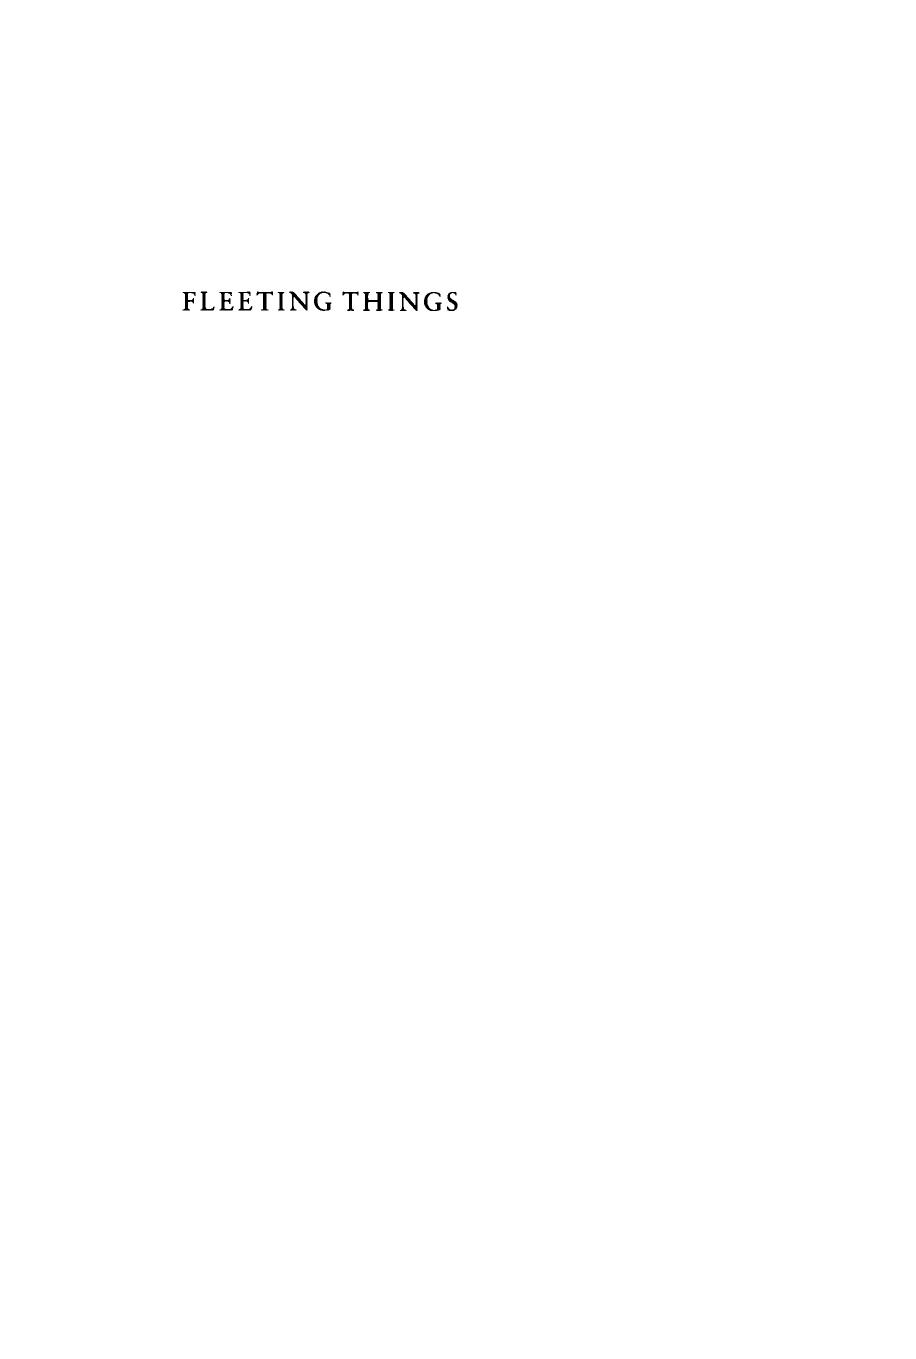 Fleeting Things: English Poets and Poems, 1616â1660 by Gerald Hammond